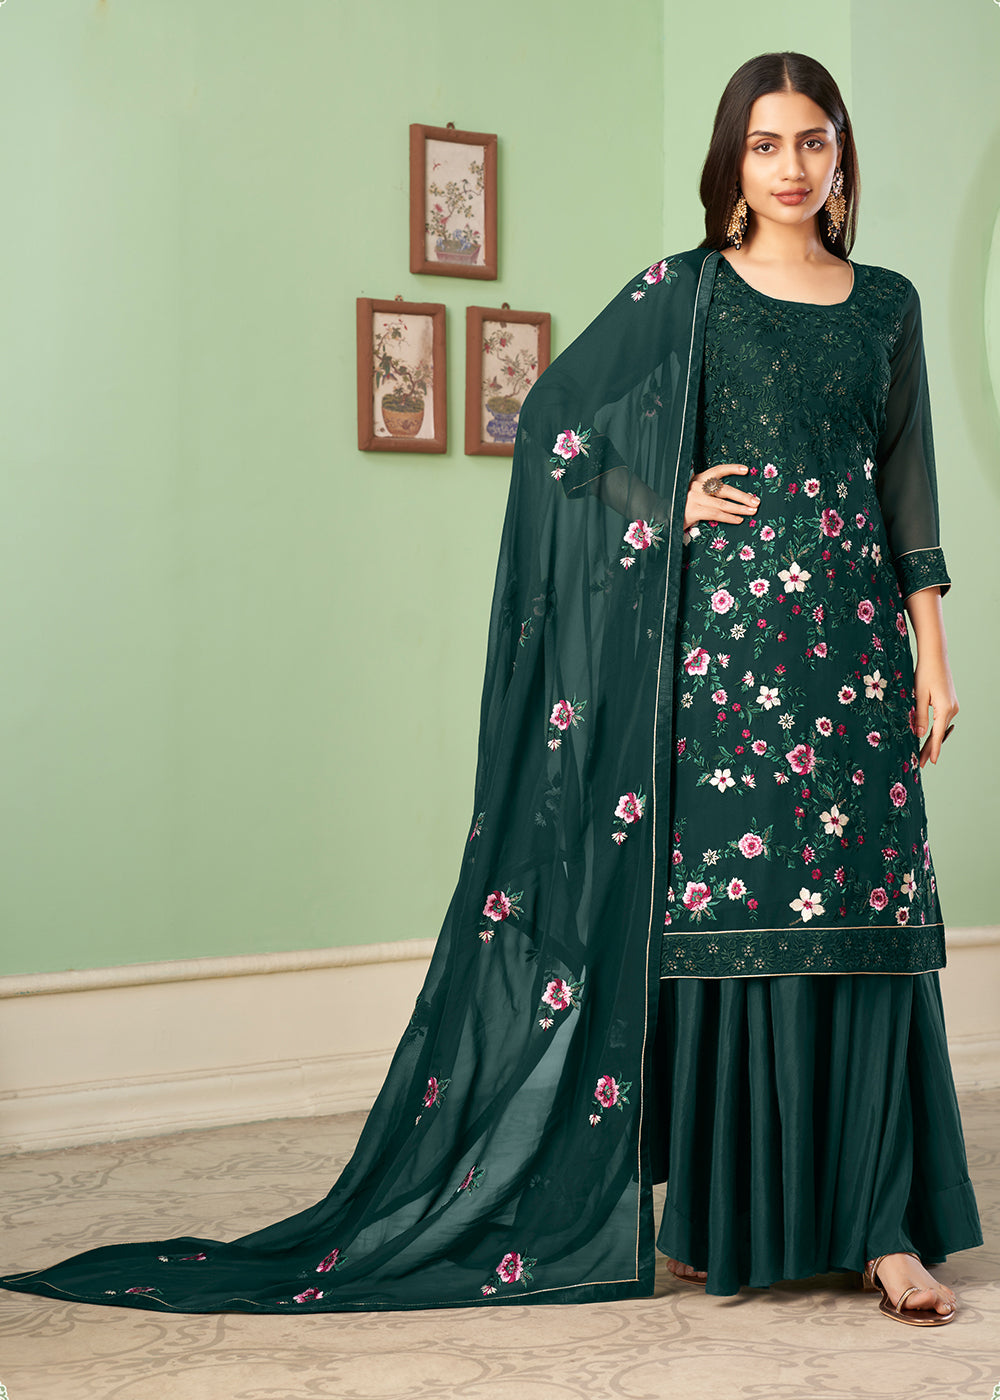 Buy Now Multi Thread Ingenious Dark Green Georgette Palazzo Salwar Suit Online in USA, UK, Canada & Worldwide at Empress Clothing. 